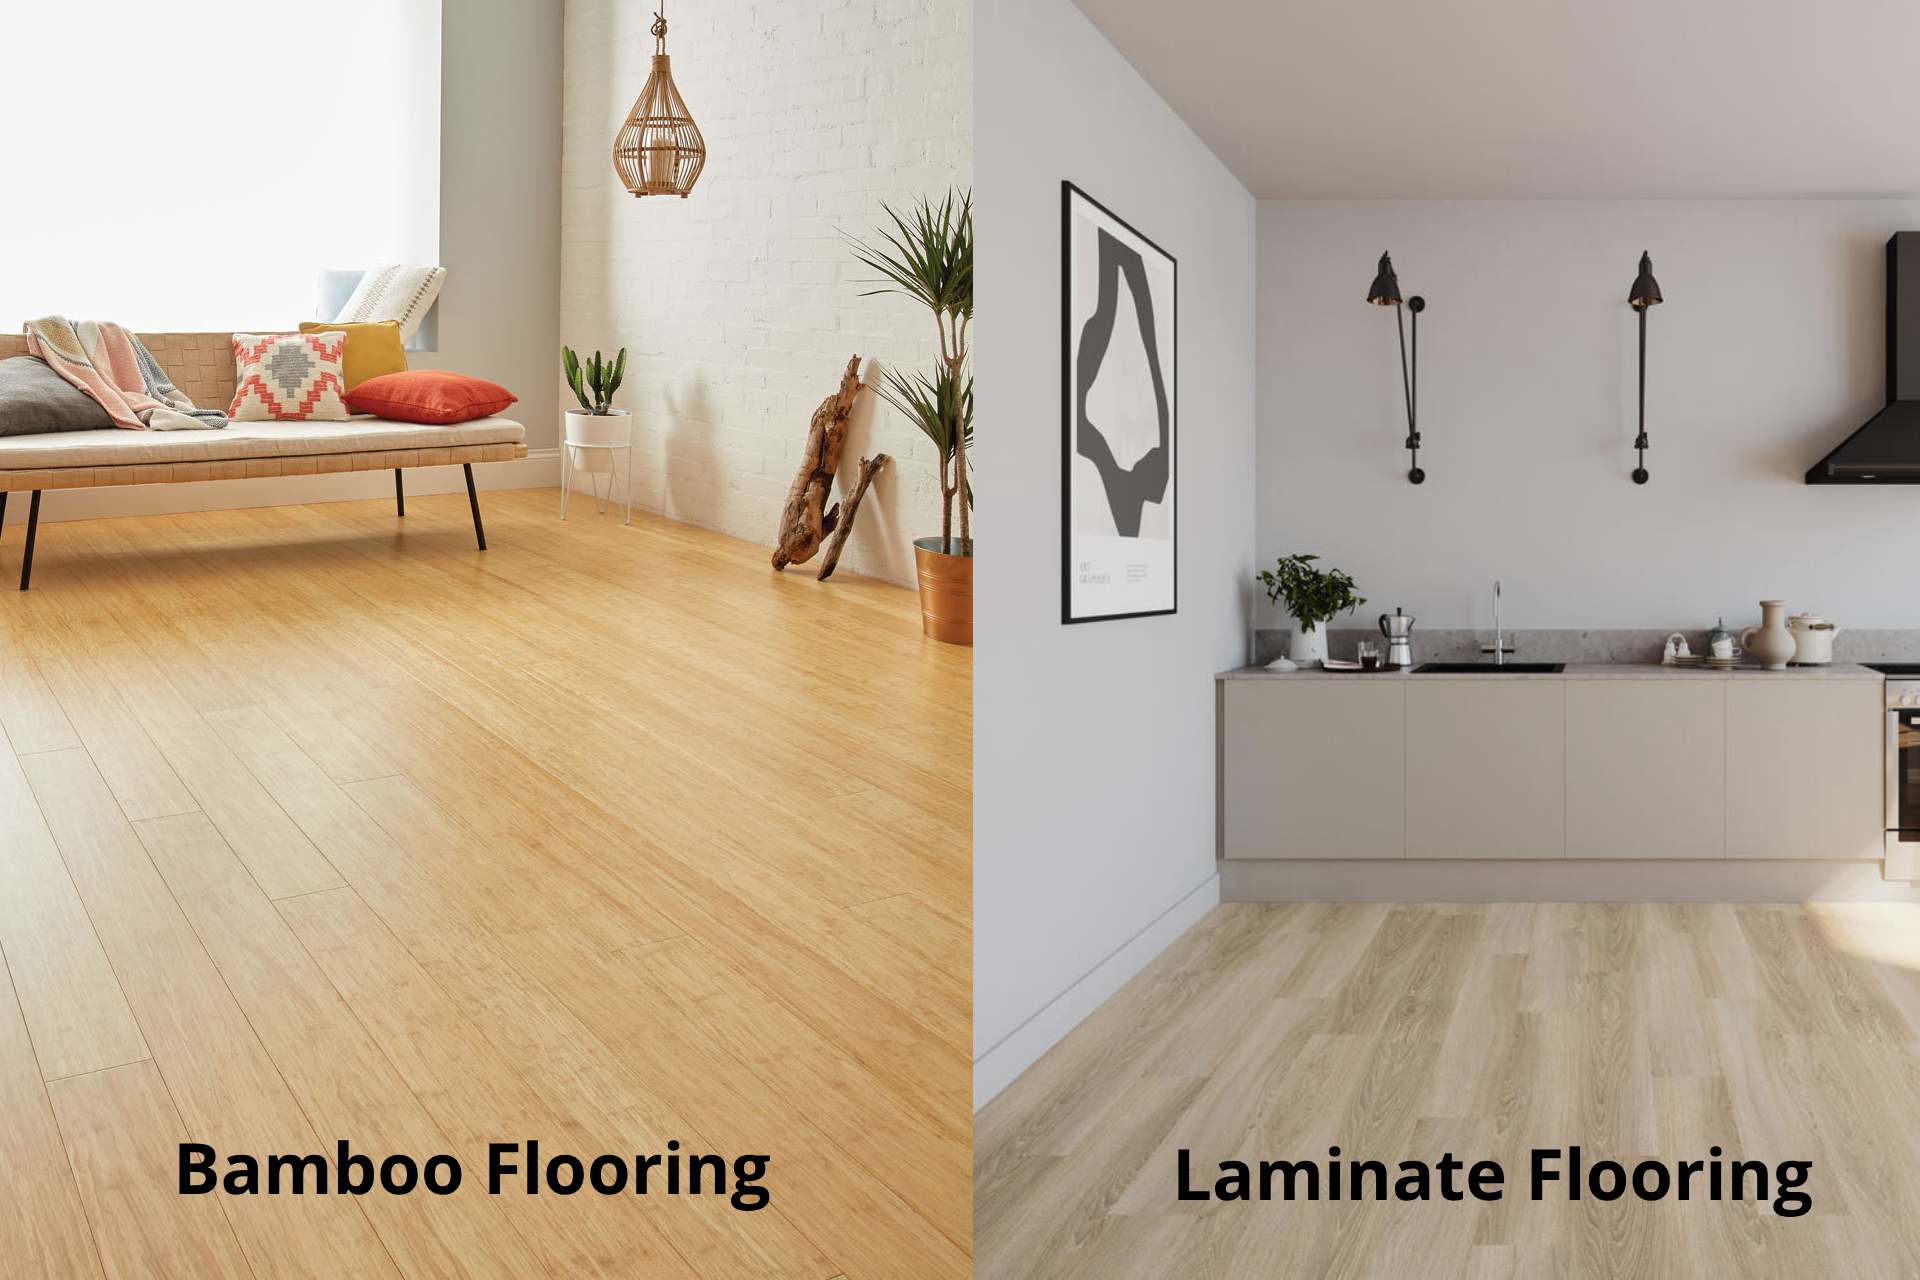 Bamboo Flooring vs. Laminate